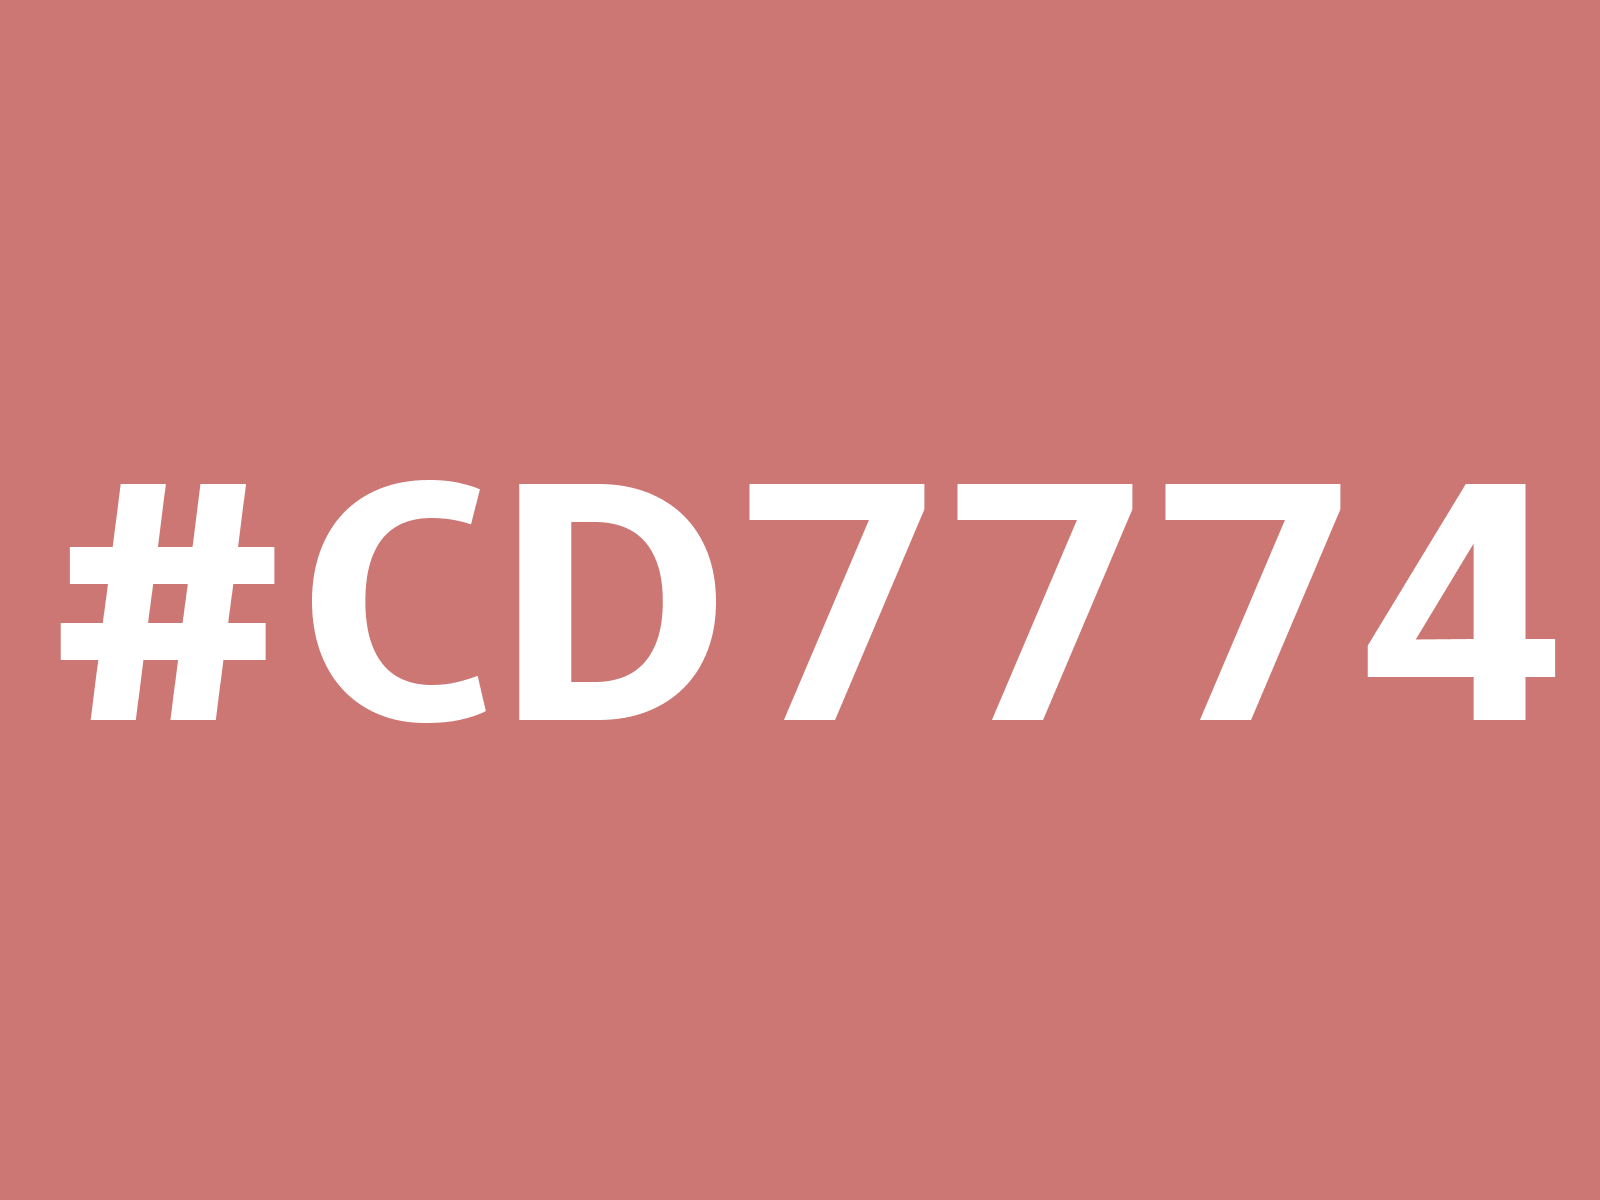 cd7774